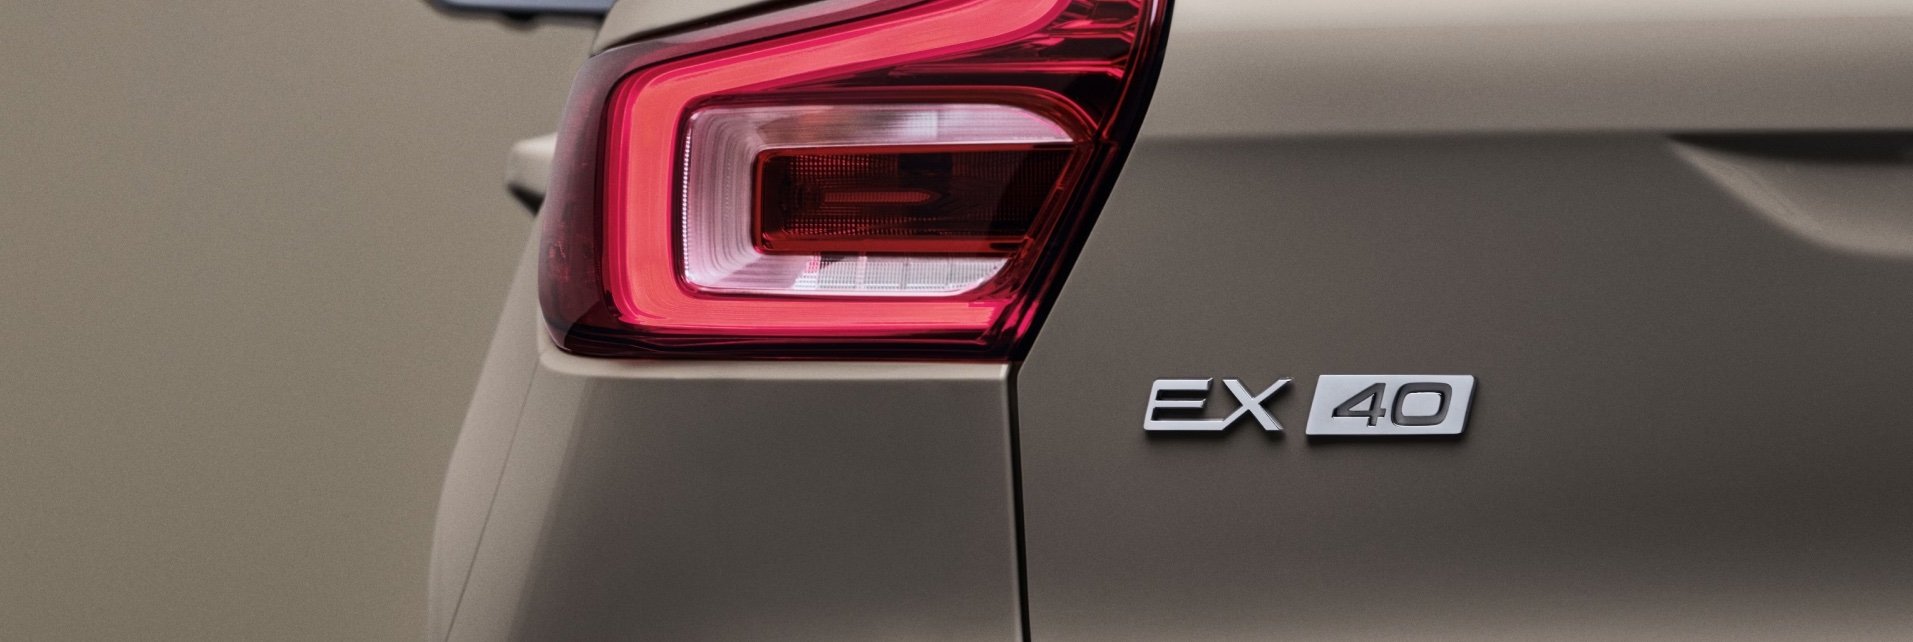 Volvo XC40 wordt EX40